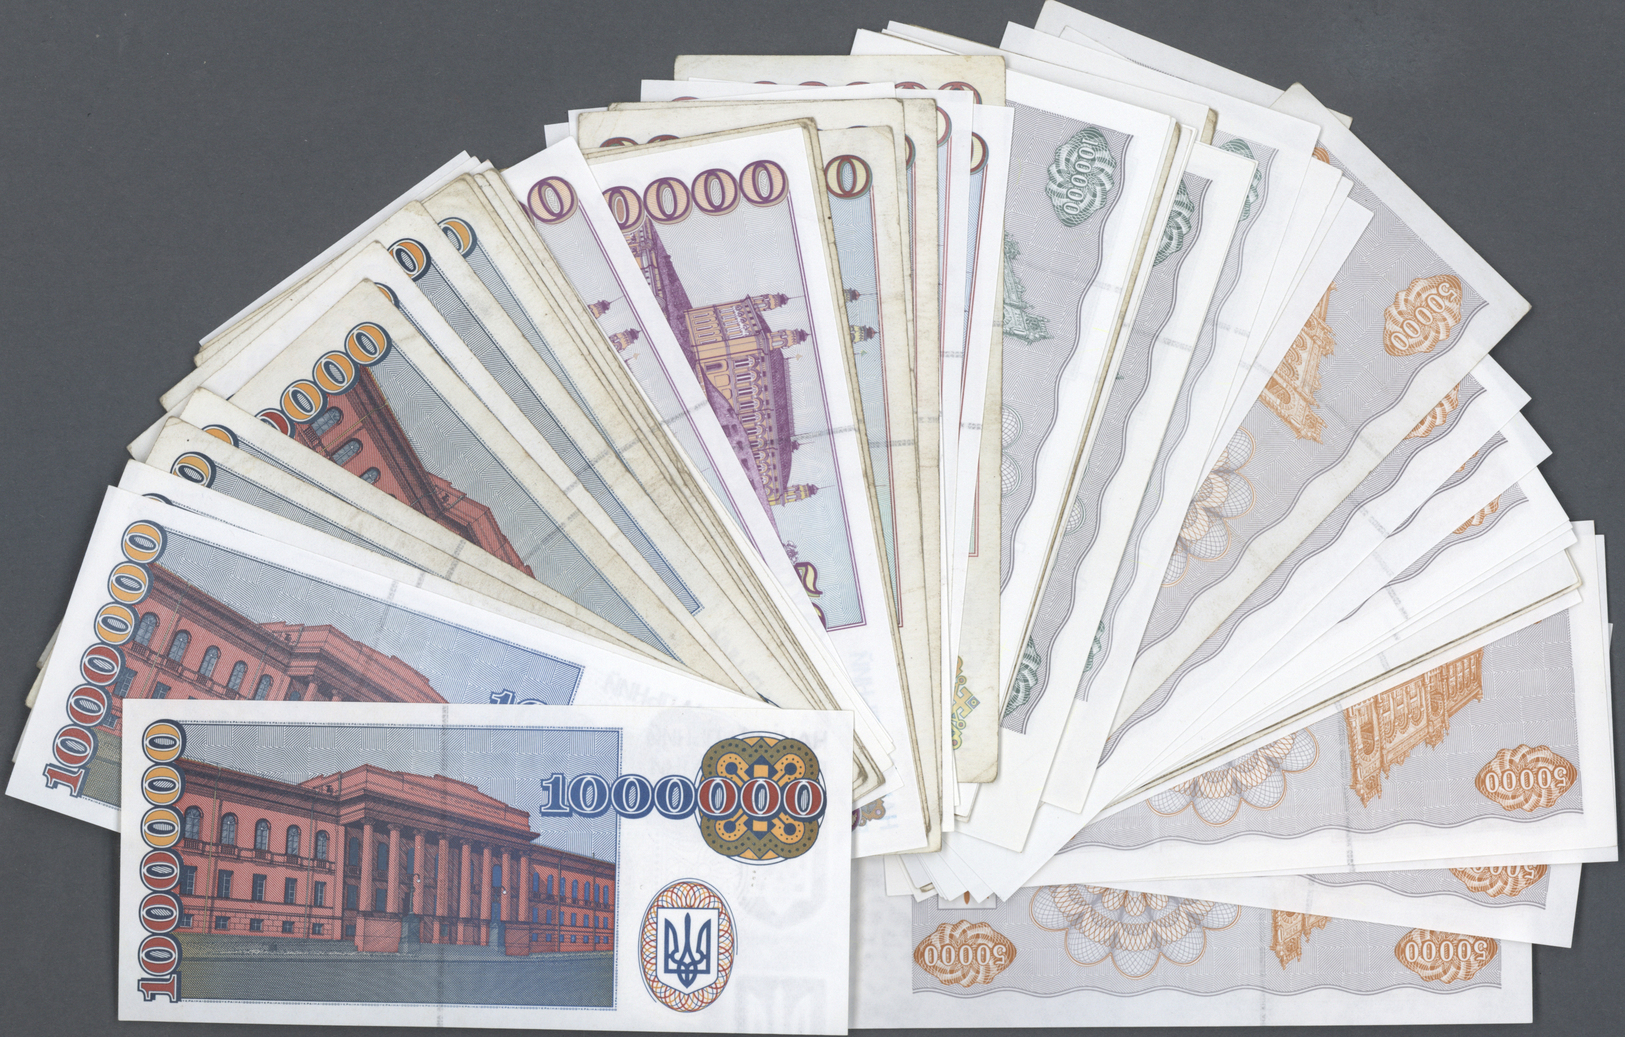 03750 Ukraina / Ukraine: Huge Set With 337 Banknotes Of The Ukrainian National Bank Issues 1991 - 1995, Containing 27 X - Ukraine